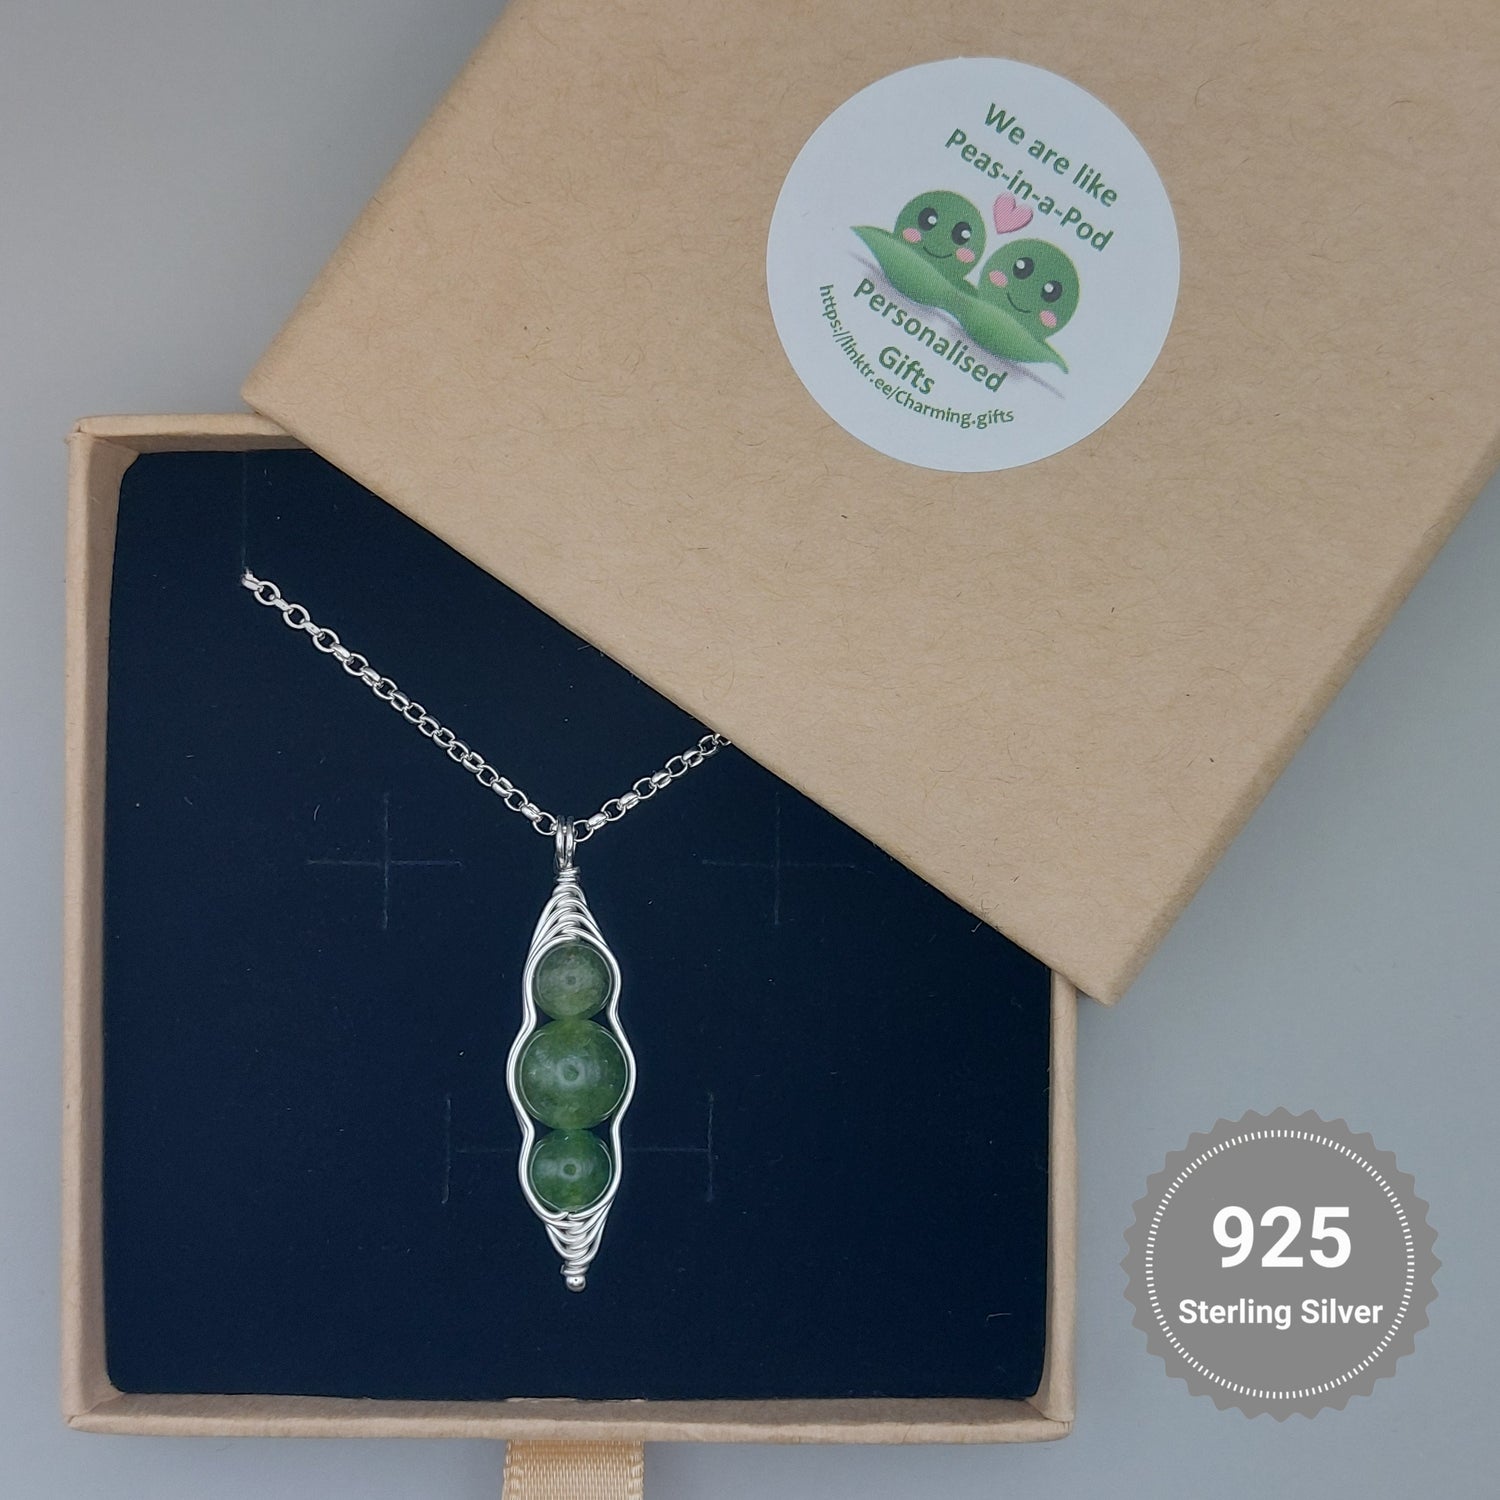 green jade necklace